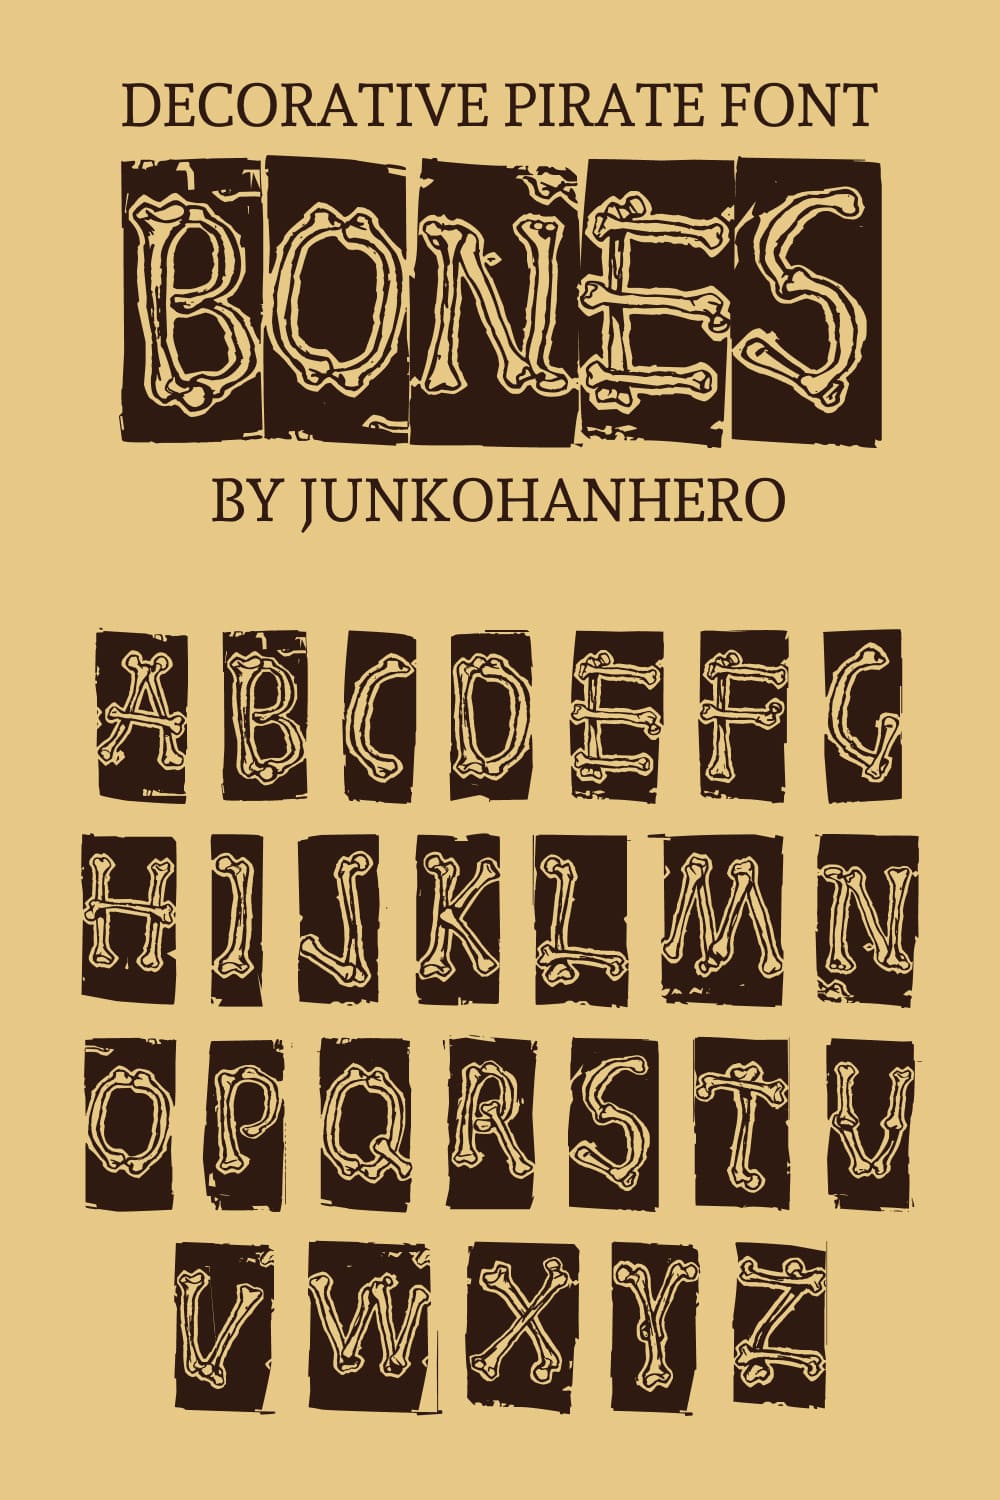 Bones Free Pirate Font.